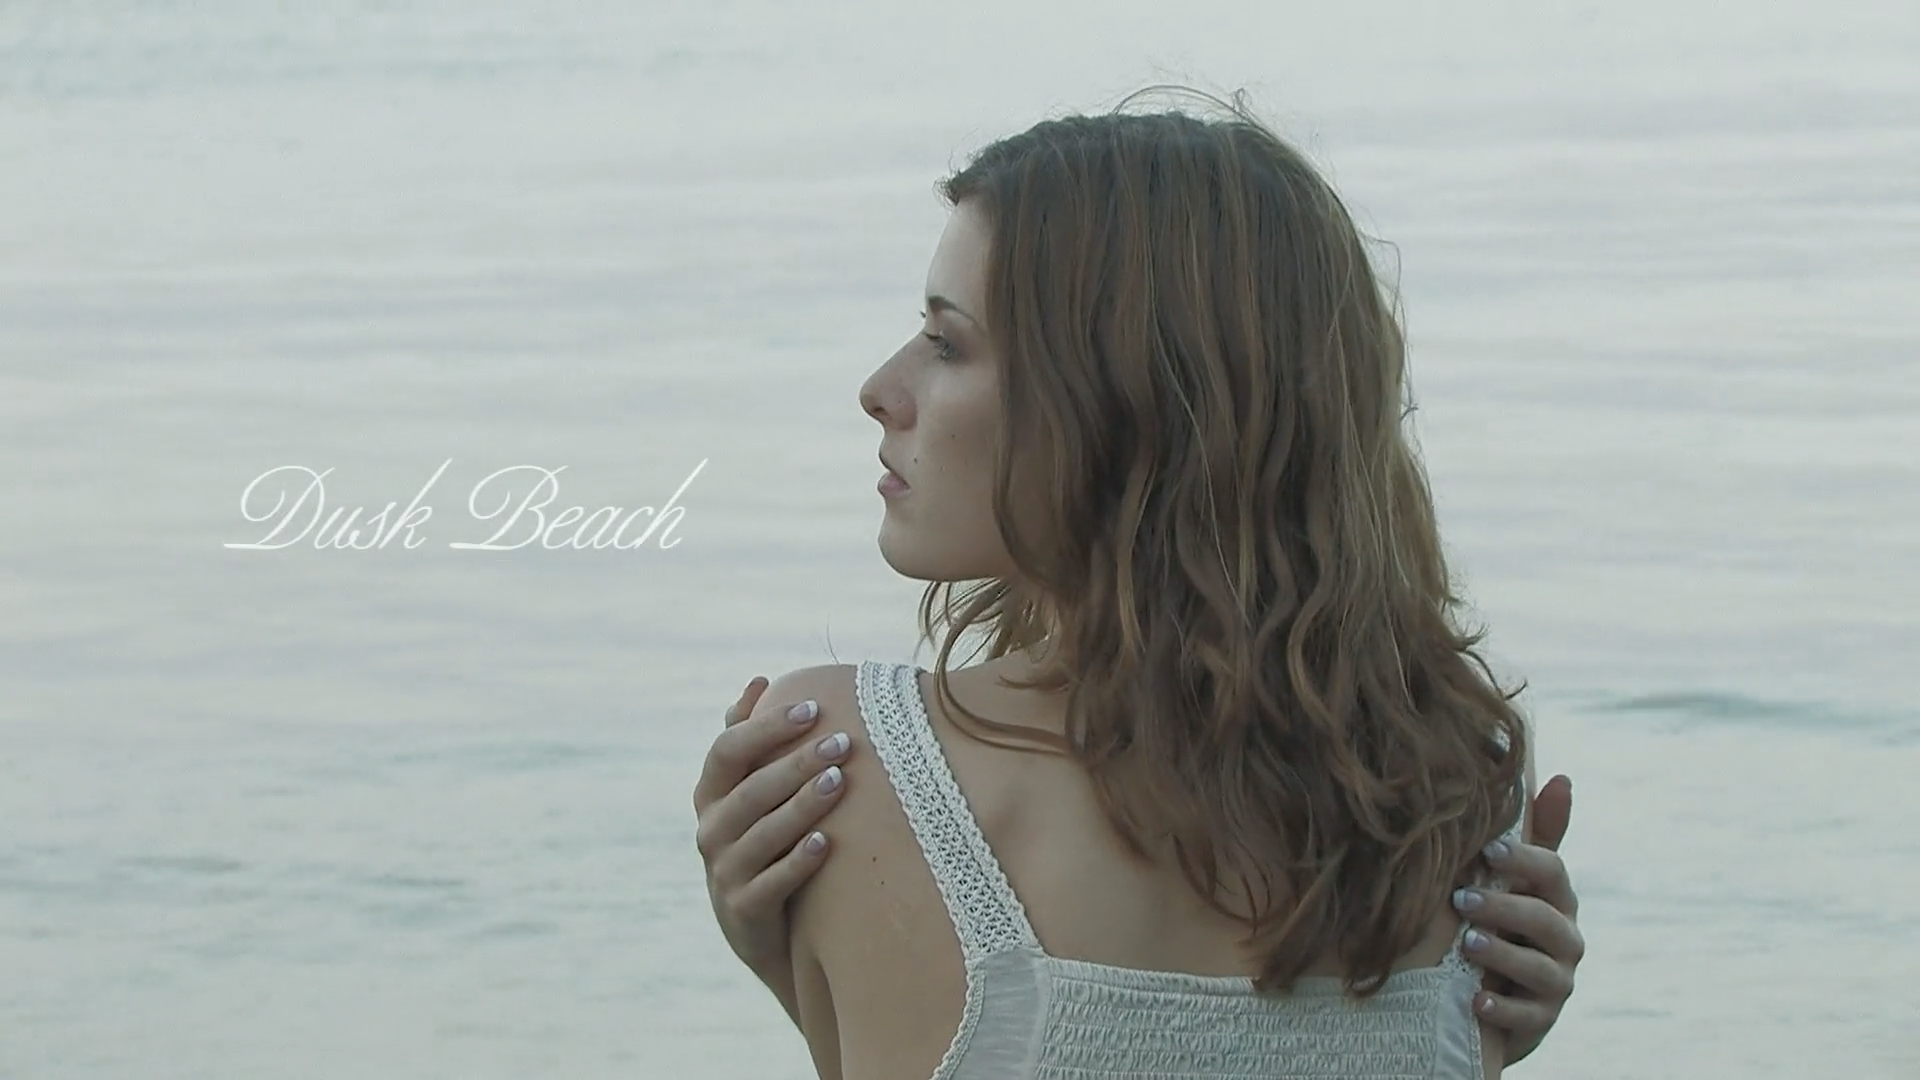 Dusk Beach – Sienna Hayes